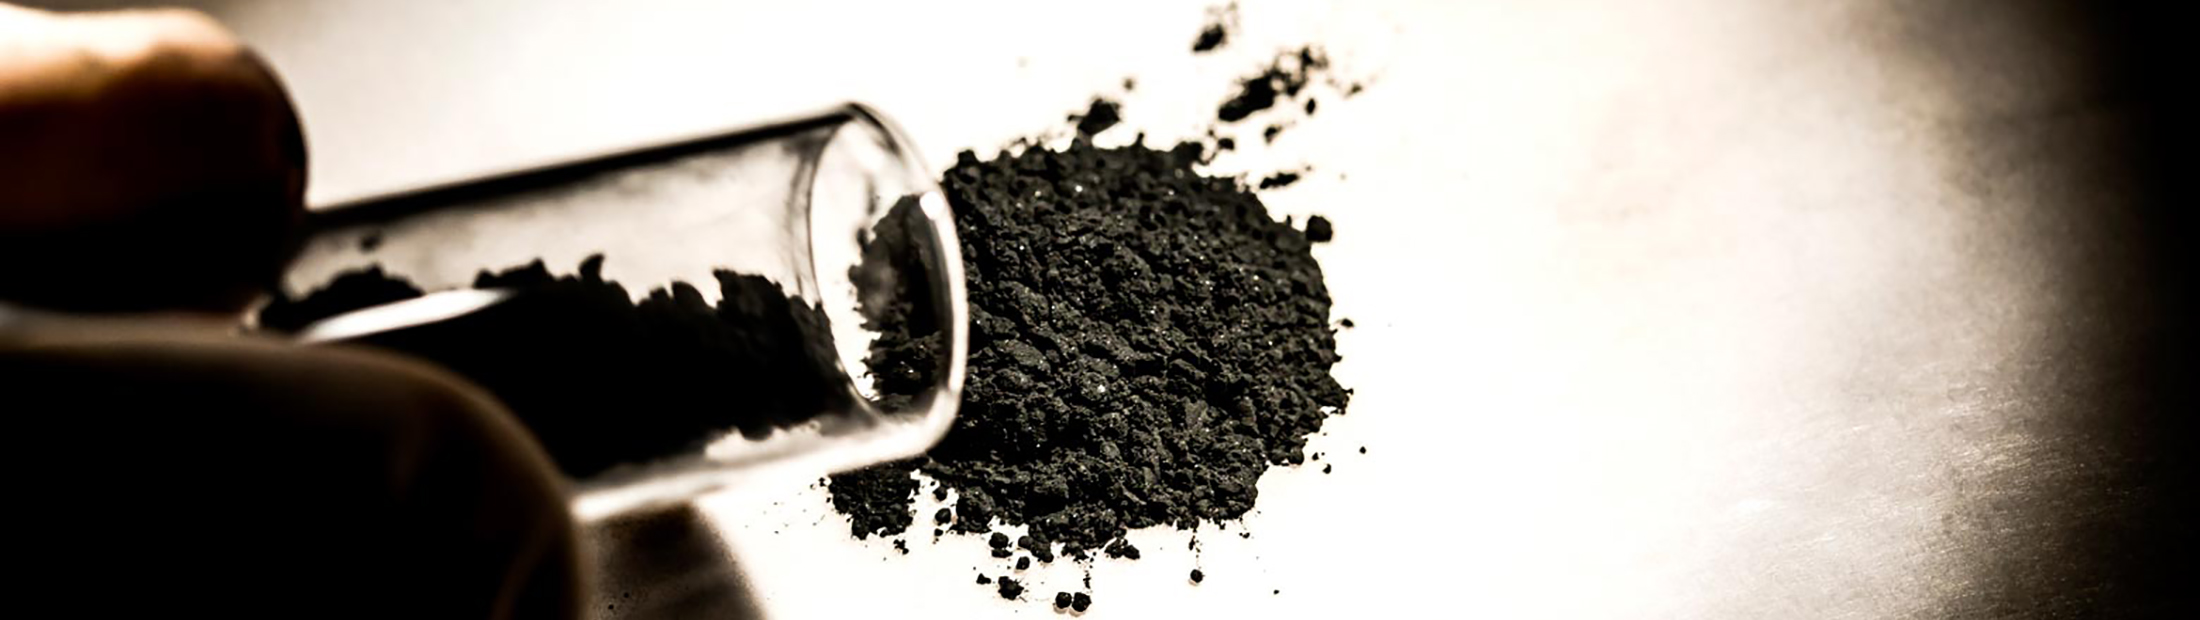 a close up image of a black, copper selenide powder